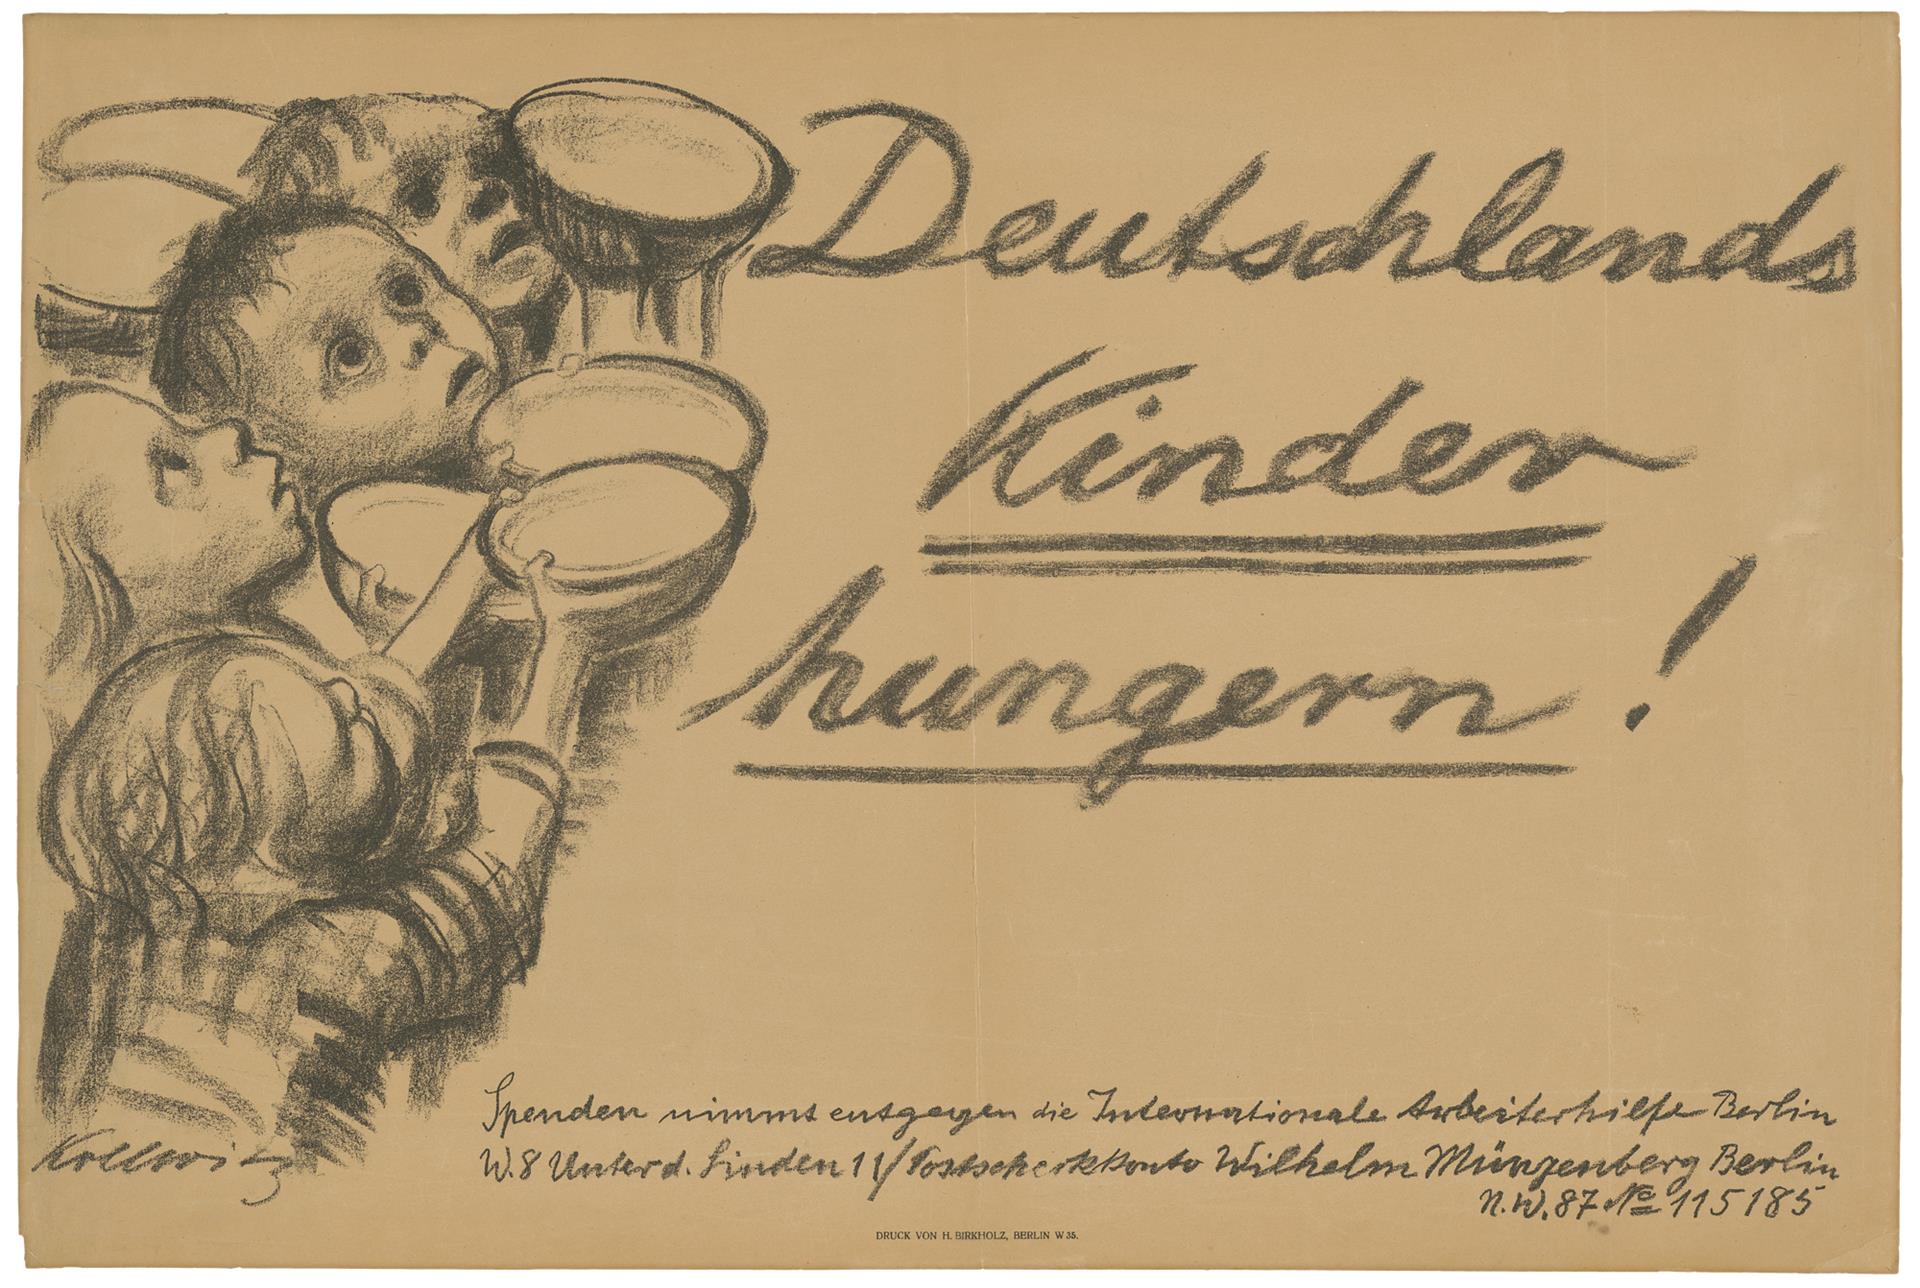  Käthe Kollwitz, Poster »Germany’s Children are starving!«, 1923, chalk lithograph (transfer), Kn 202 B